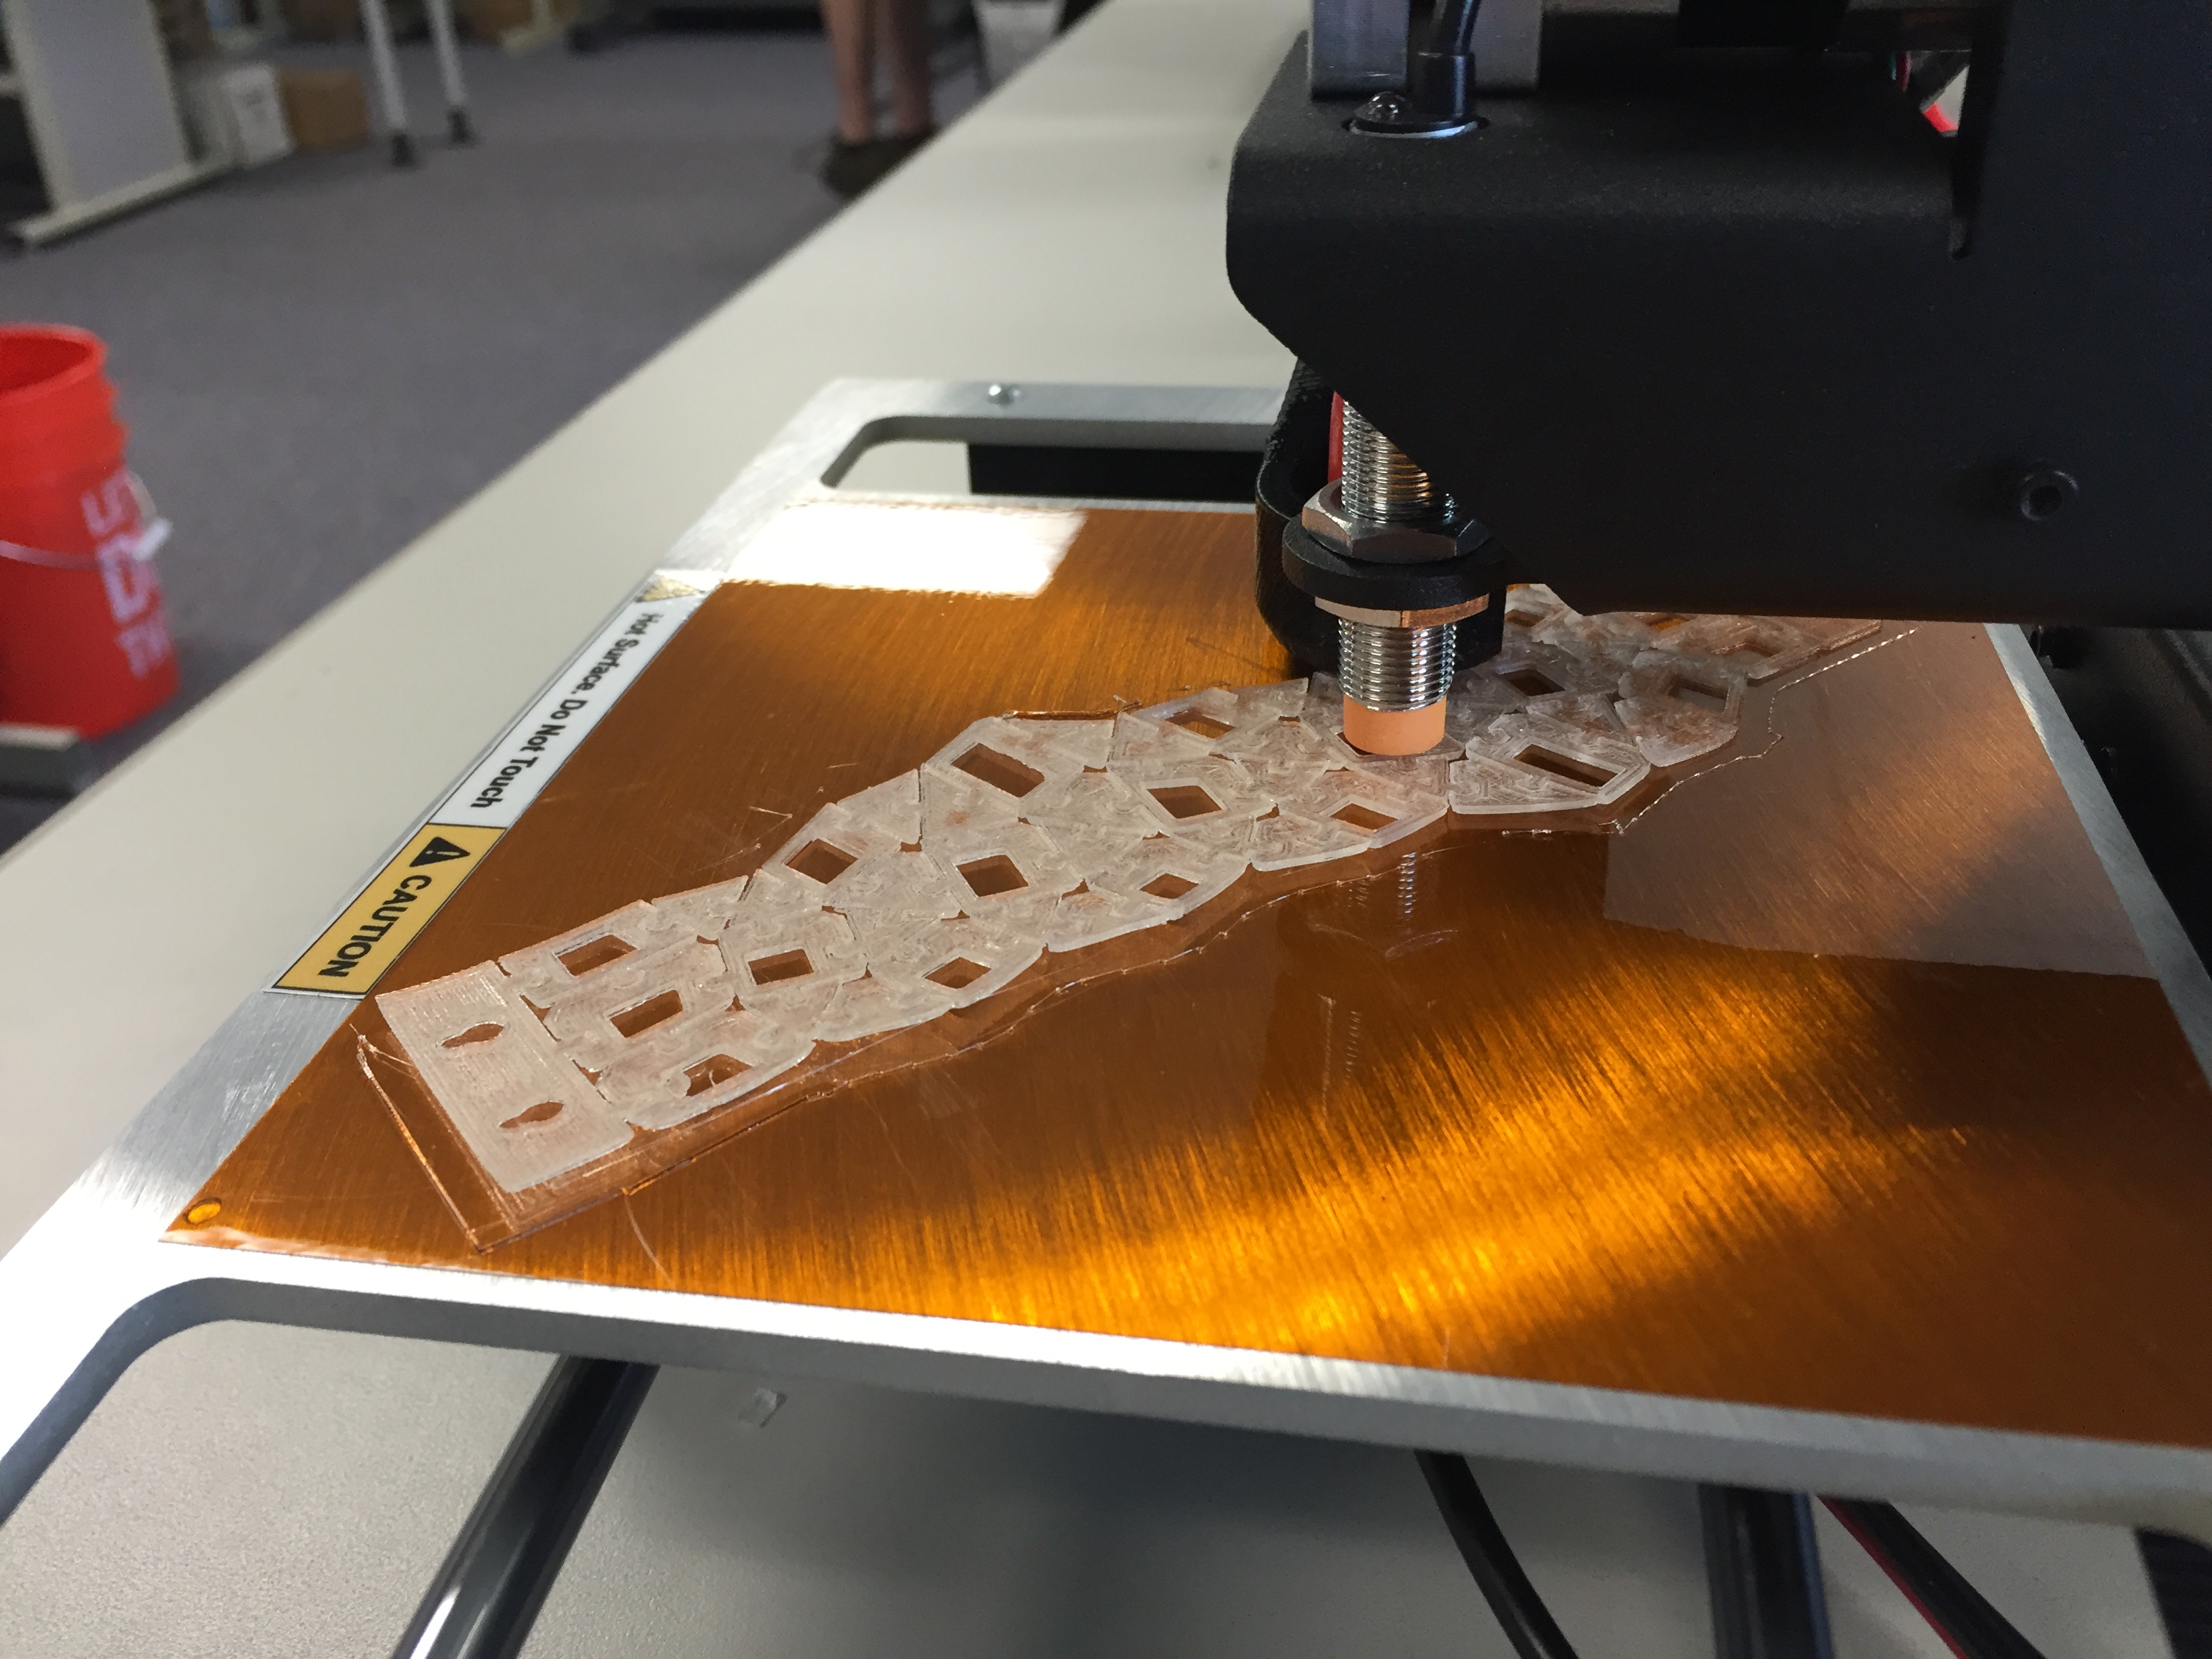 A 3-D printer creating a design (Photo by Robyne, KUAC - Fairbanks)